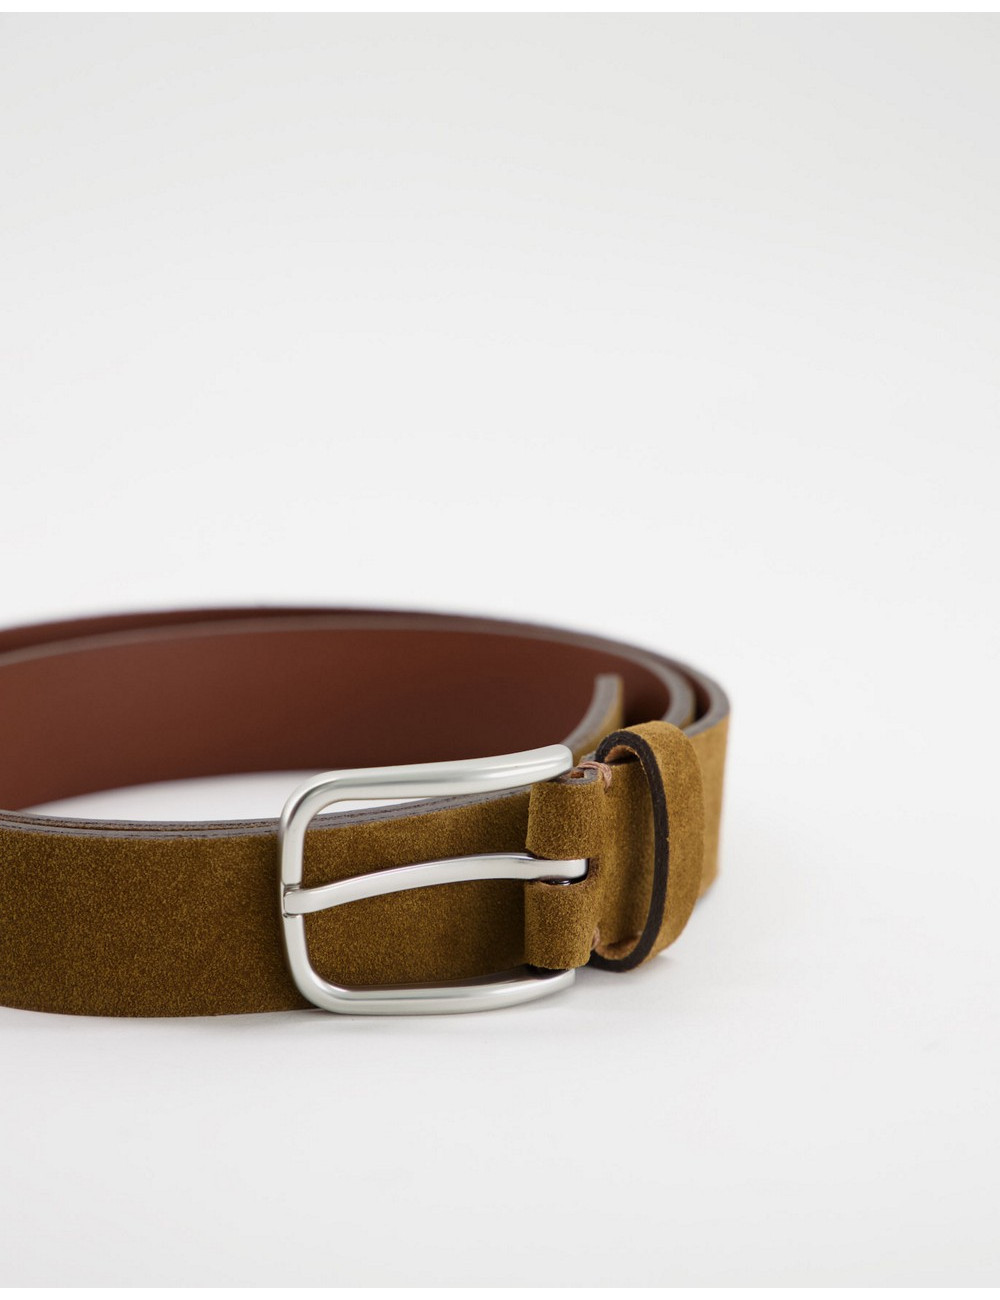 Farah soft belt in tan leather